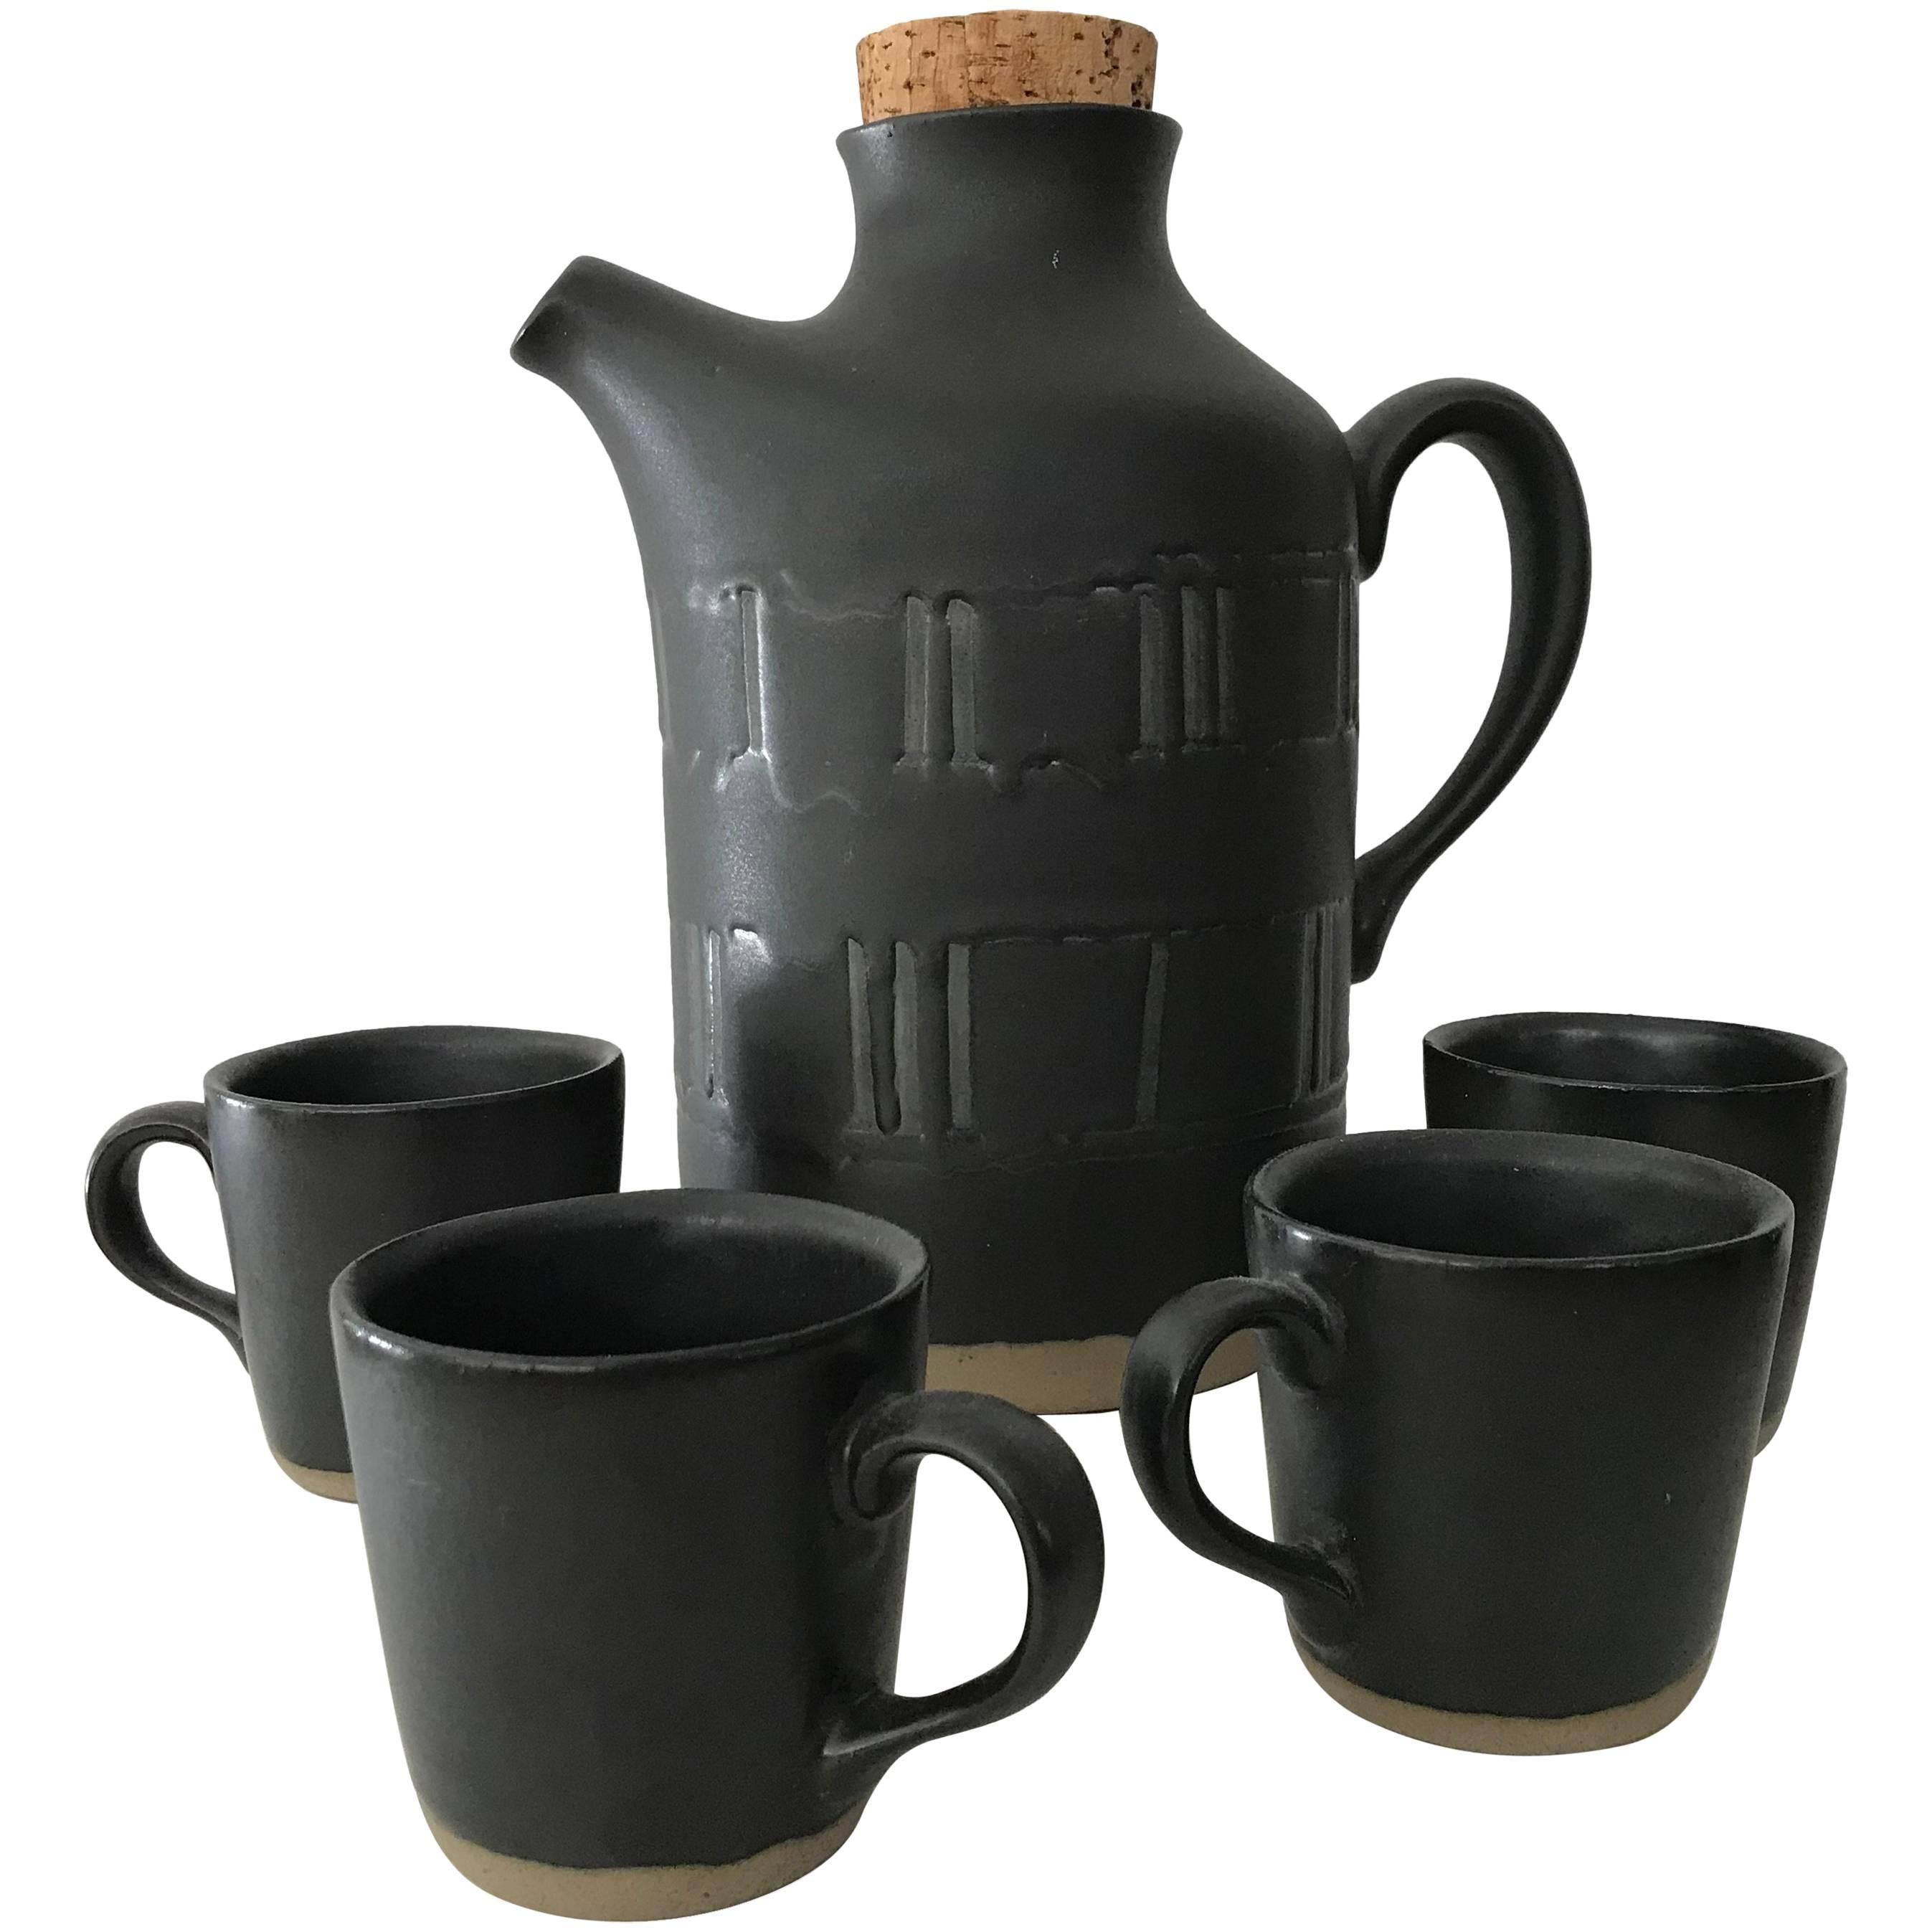 Jane & Gordon Martz for Marshall Studios Ceramic Serving Set; Pitcher and Cups